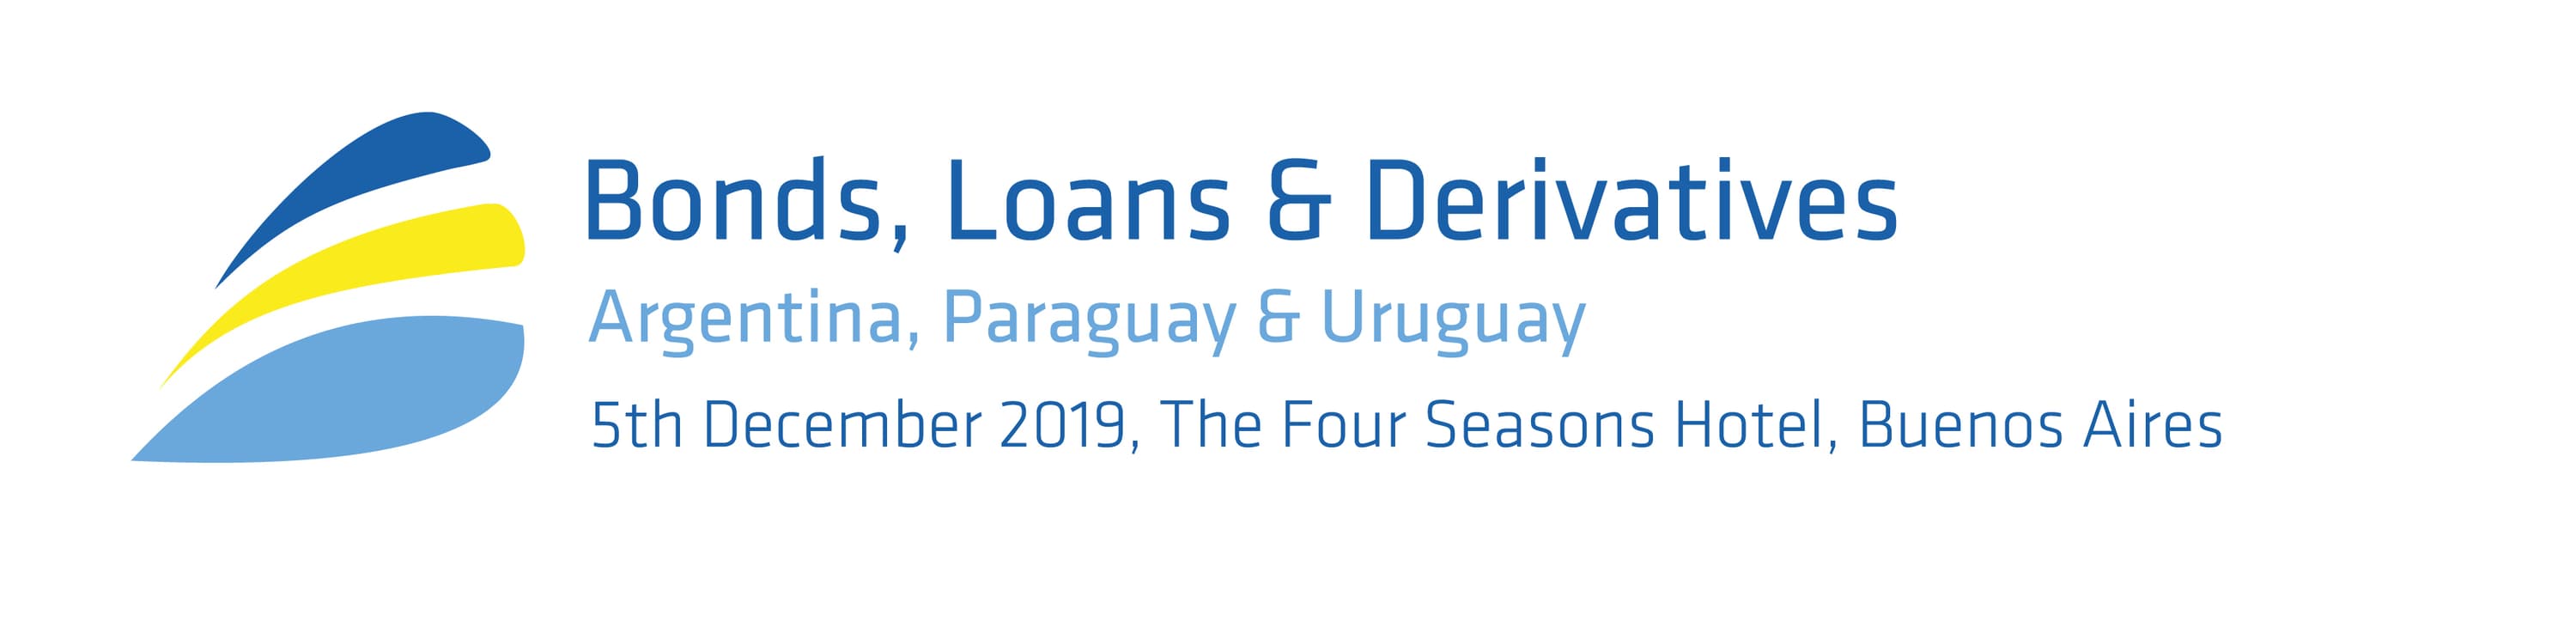 Bonds, Loans & Derivatives Argentina